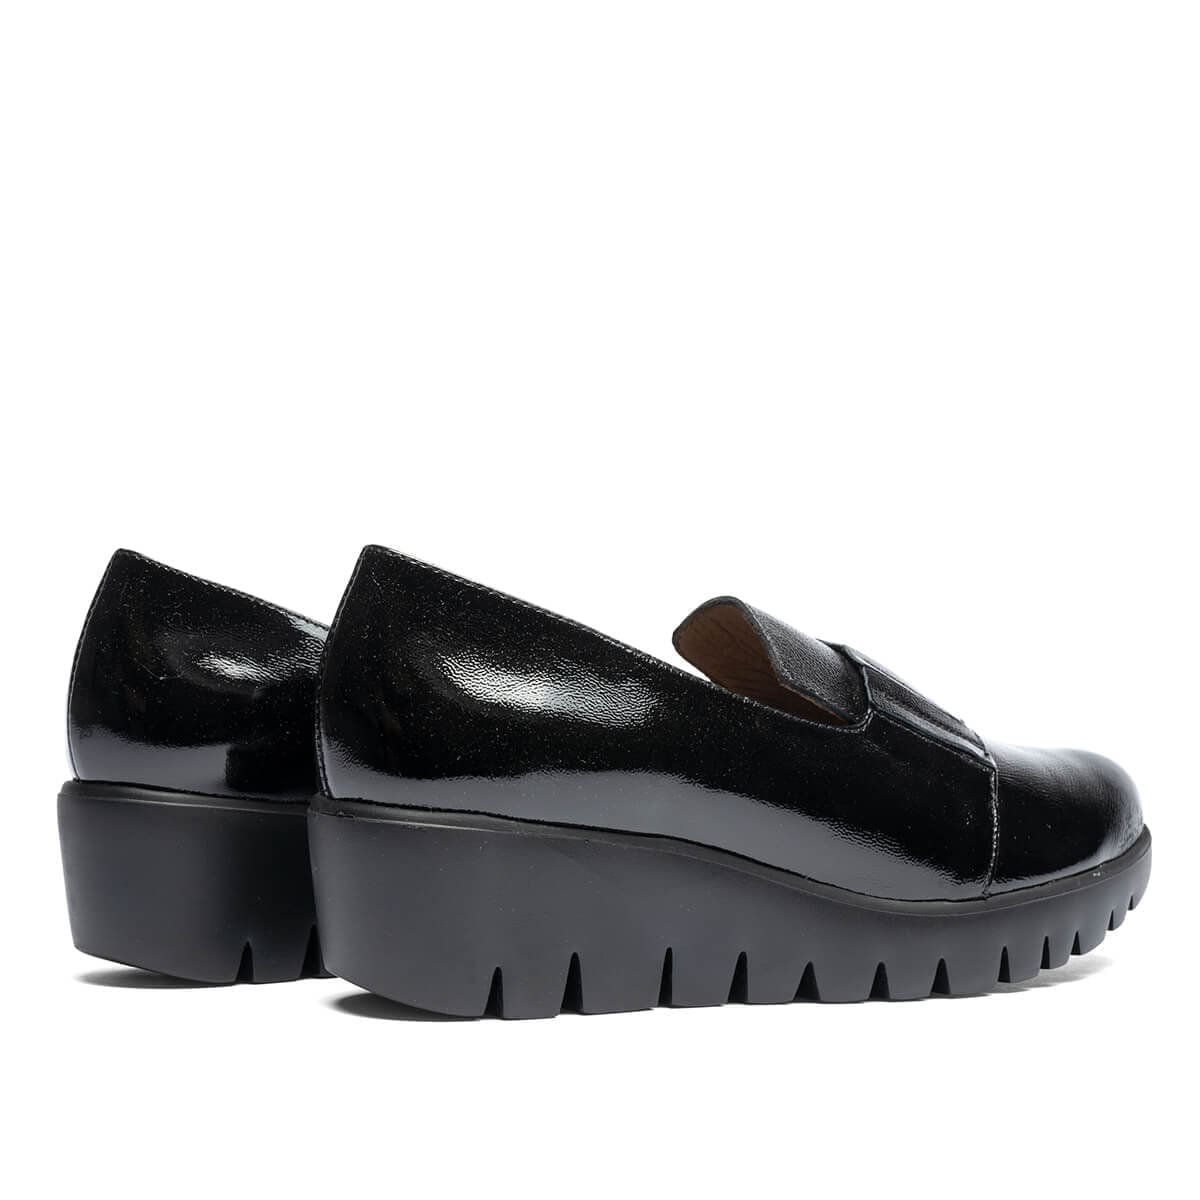 CASSERA - Black Patent - Step Ahead Shoes